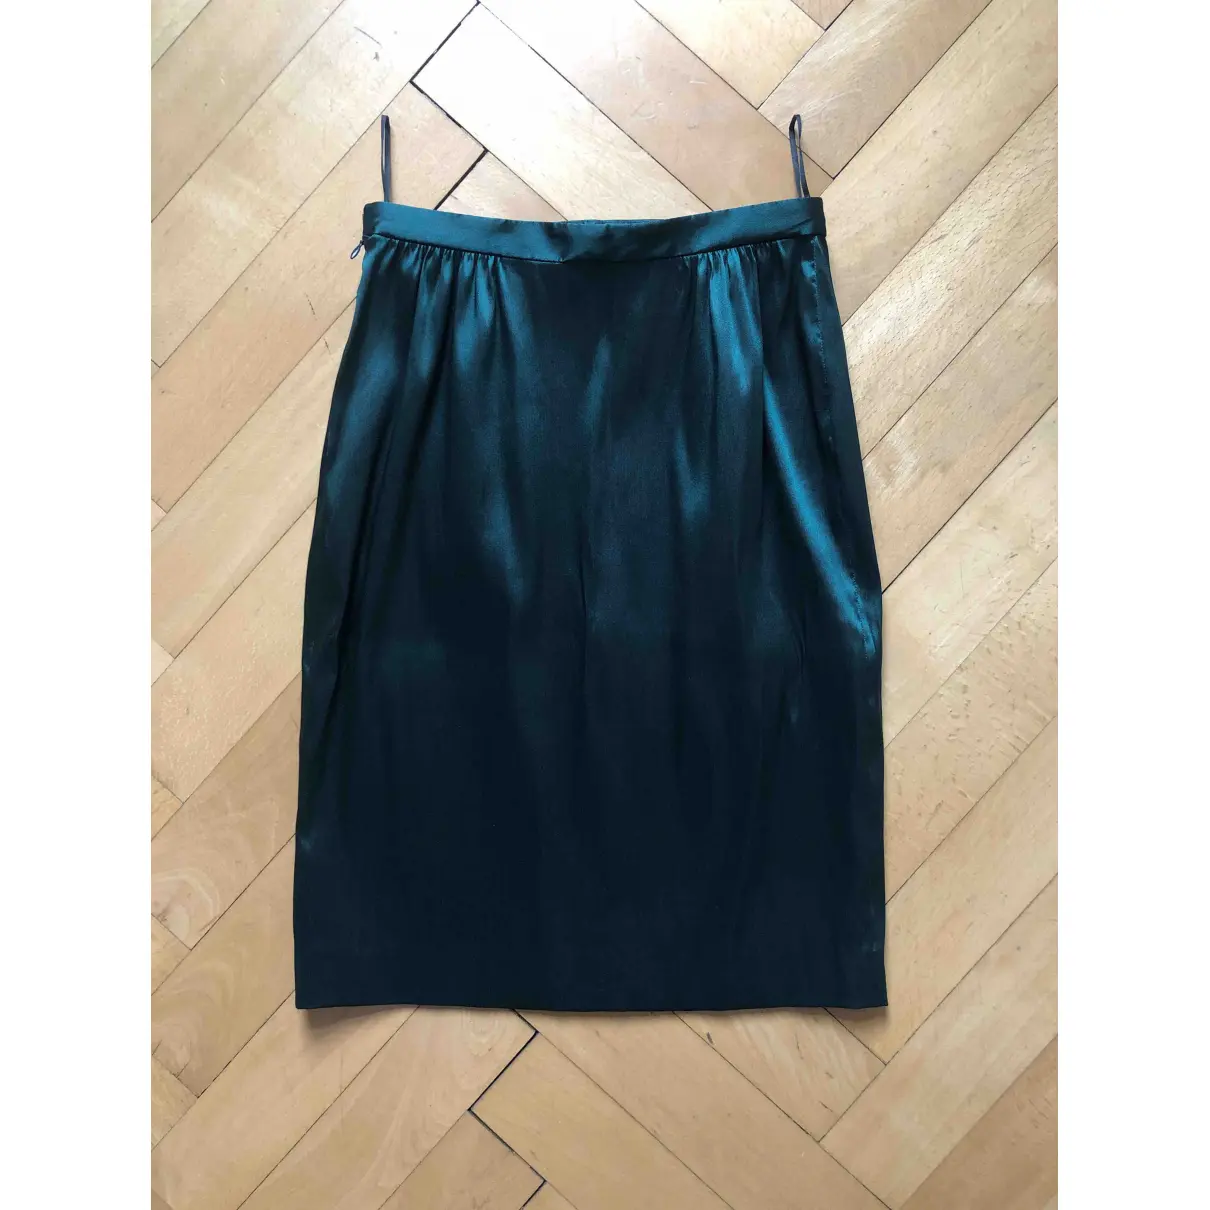 Buy Nina Ricci Silk skirt online